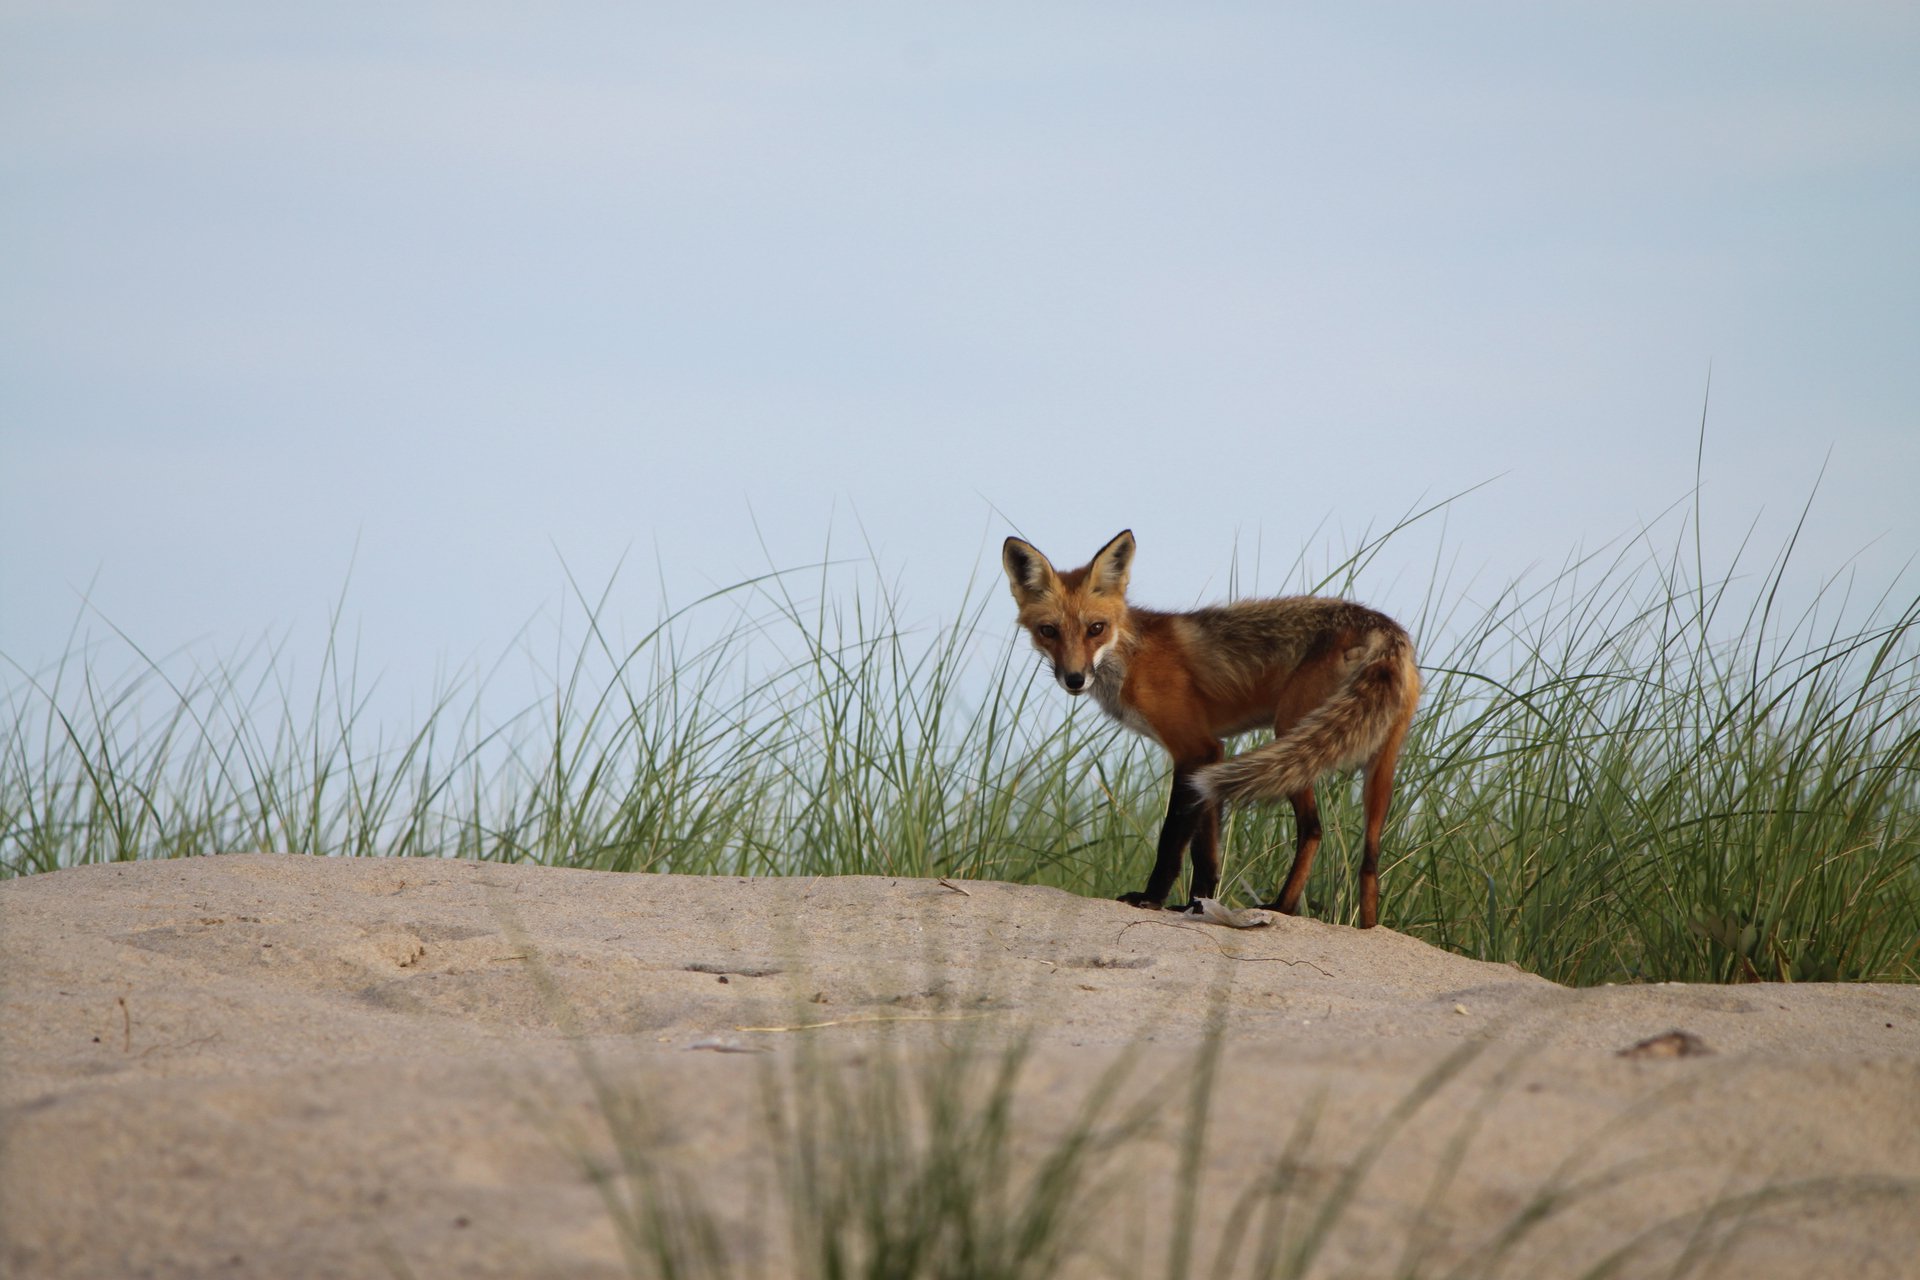 fox on sandy dune with grass